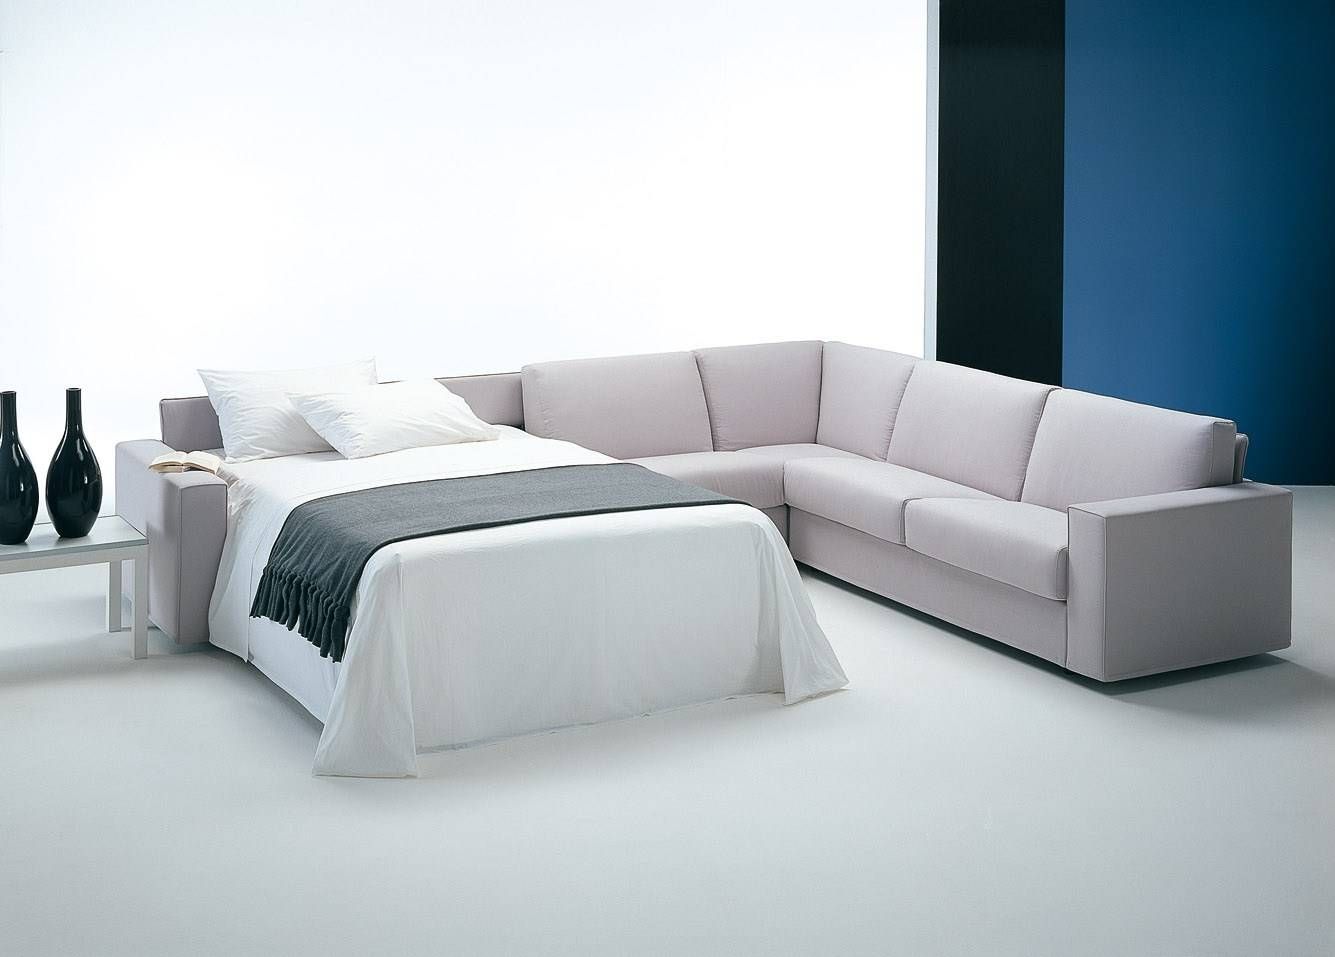 giant supermarket sofa bed